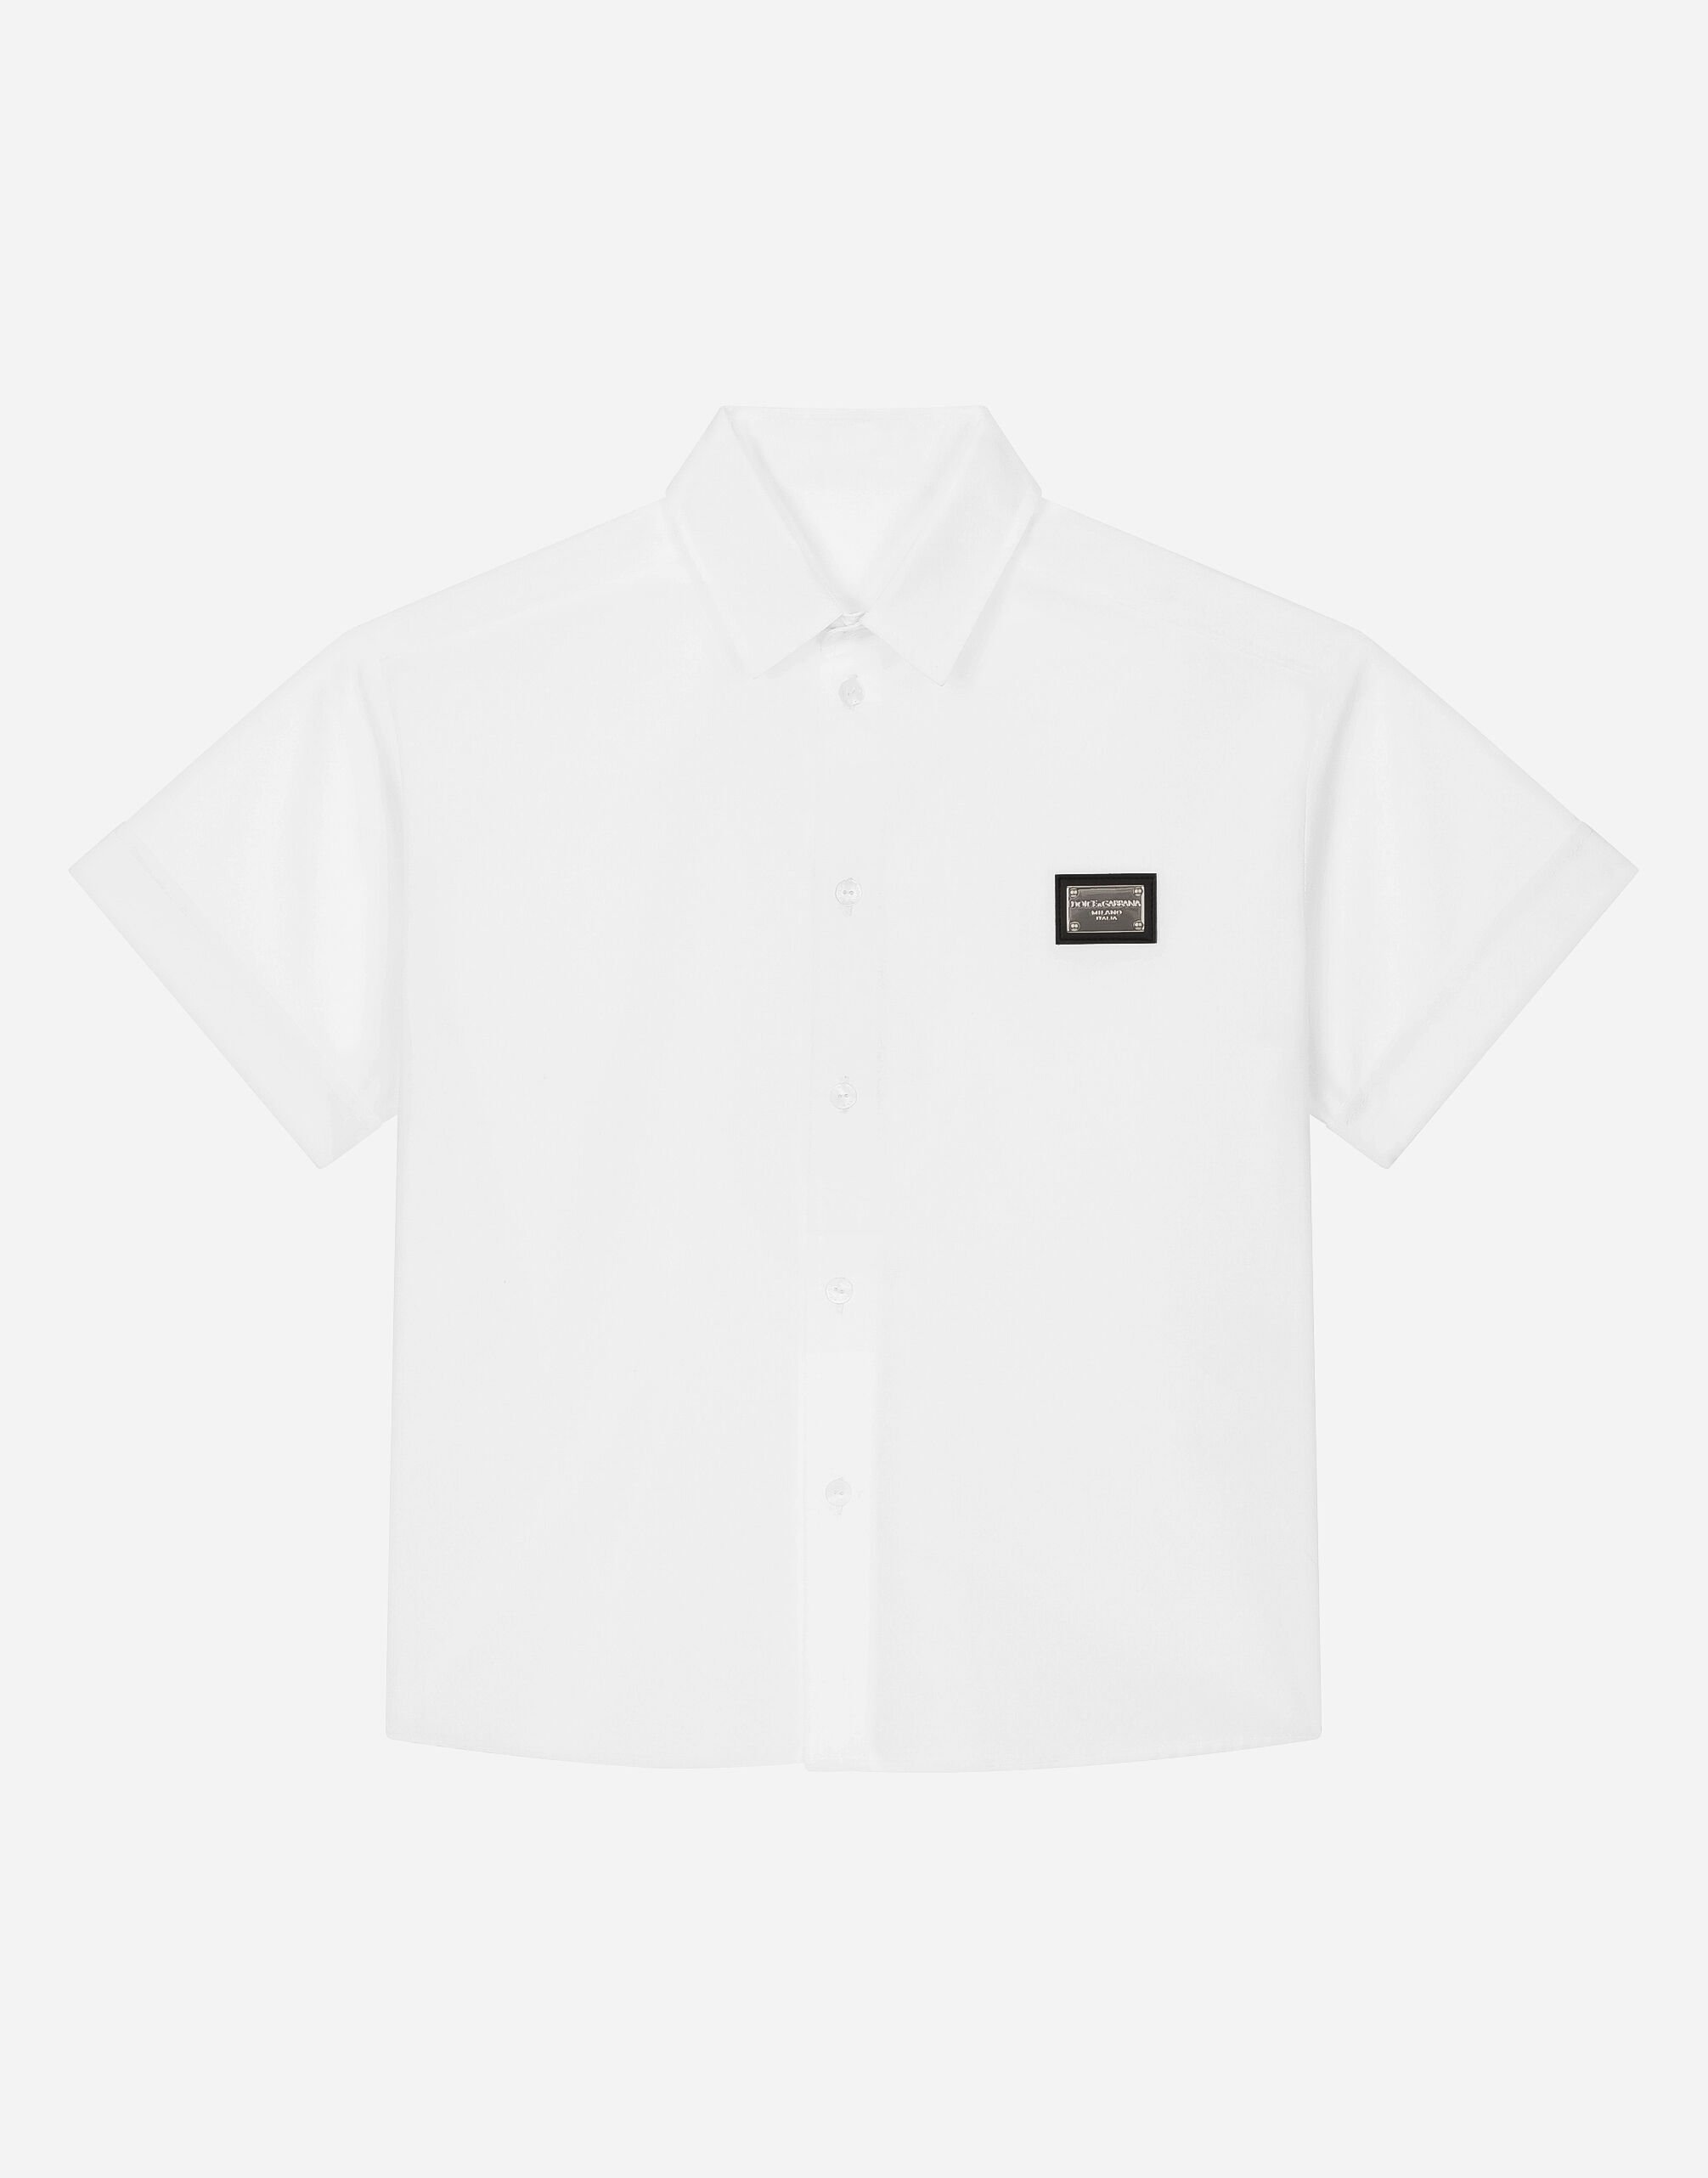 Dolce & Gabbana قميص بوبلين ببطاقة شعار مطبعة L44S11HI1S6